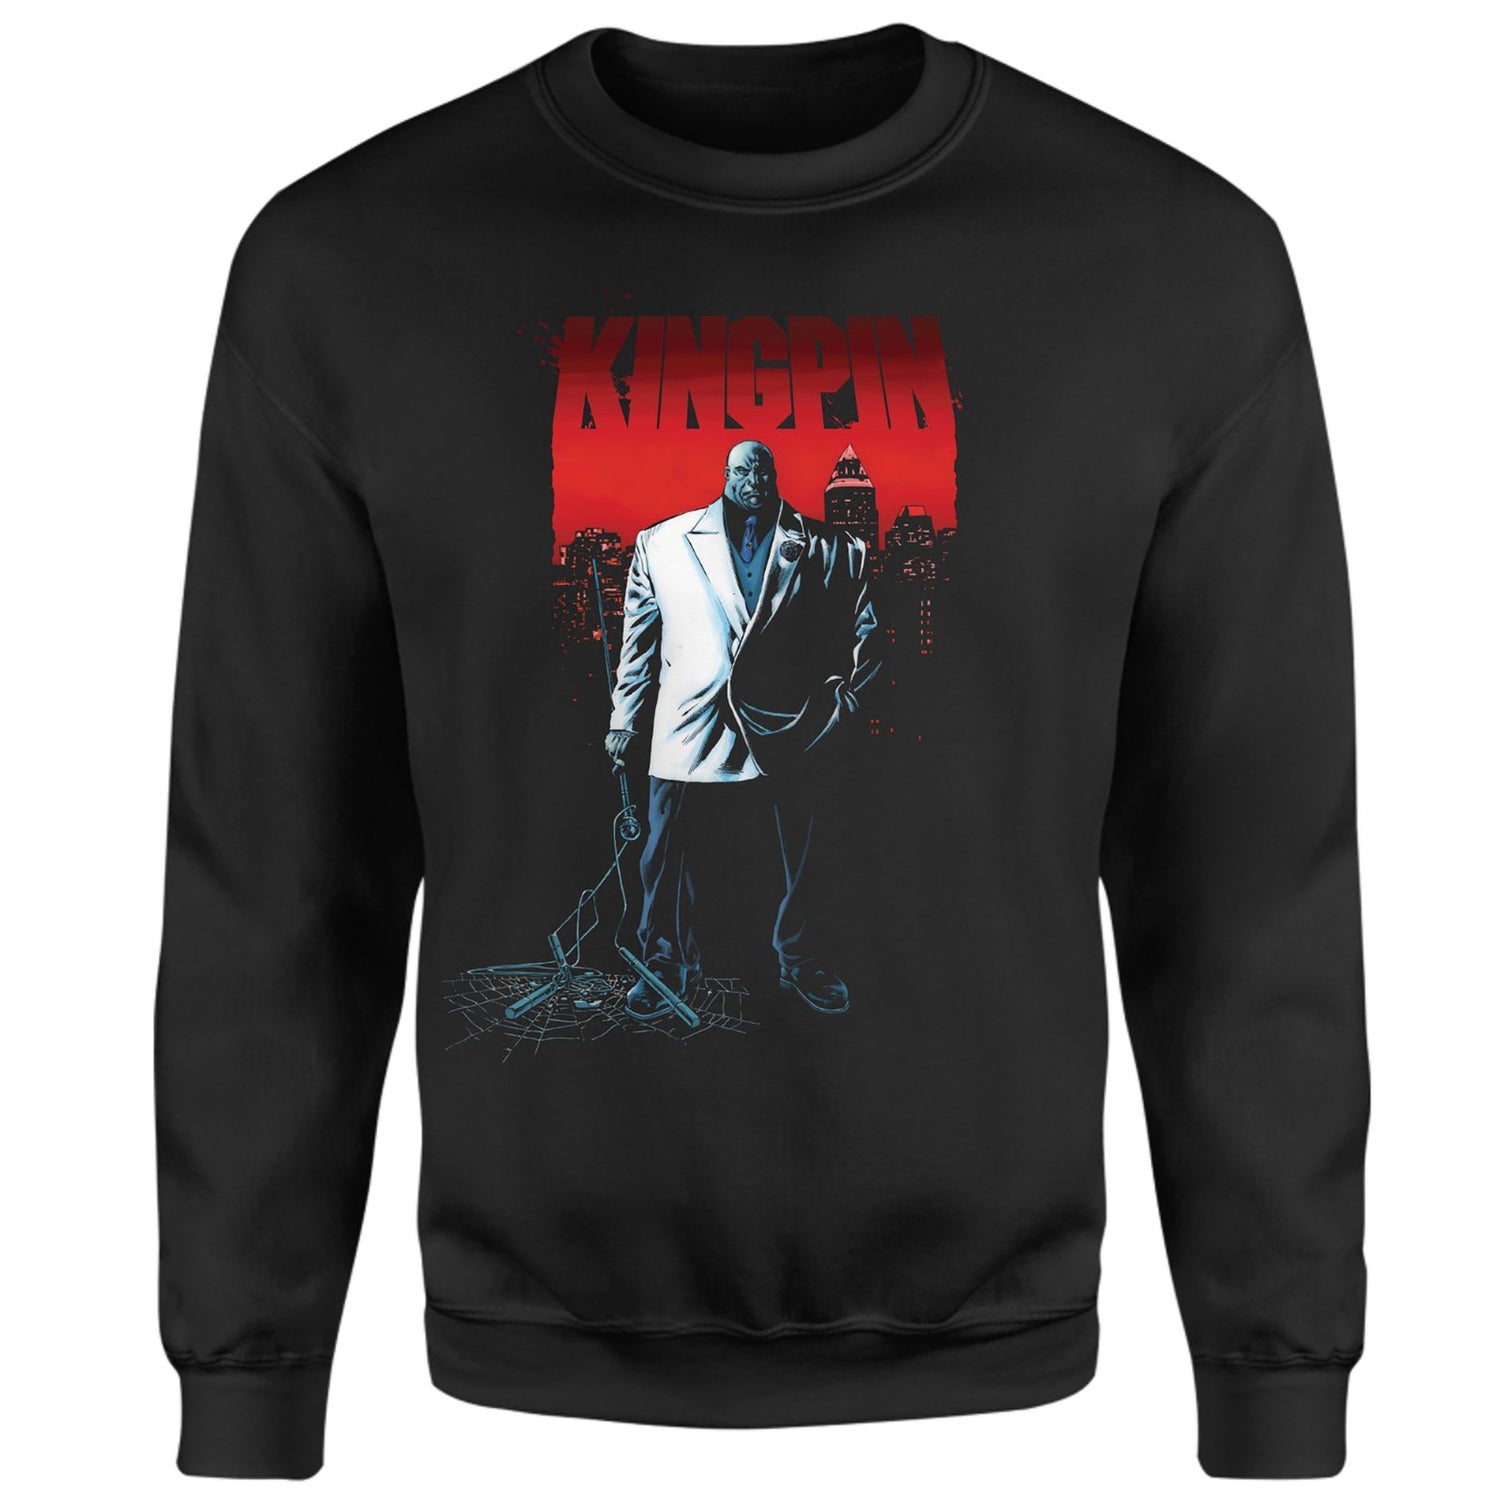 Kingpin History Of Violence Sweatshirt - Black